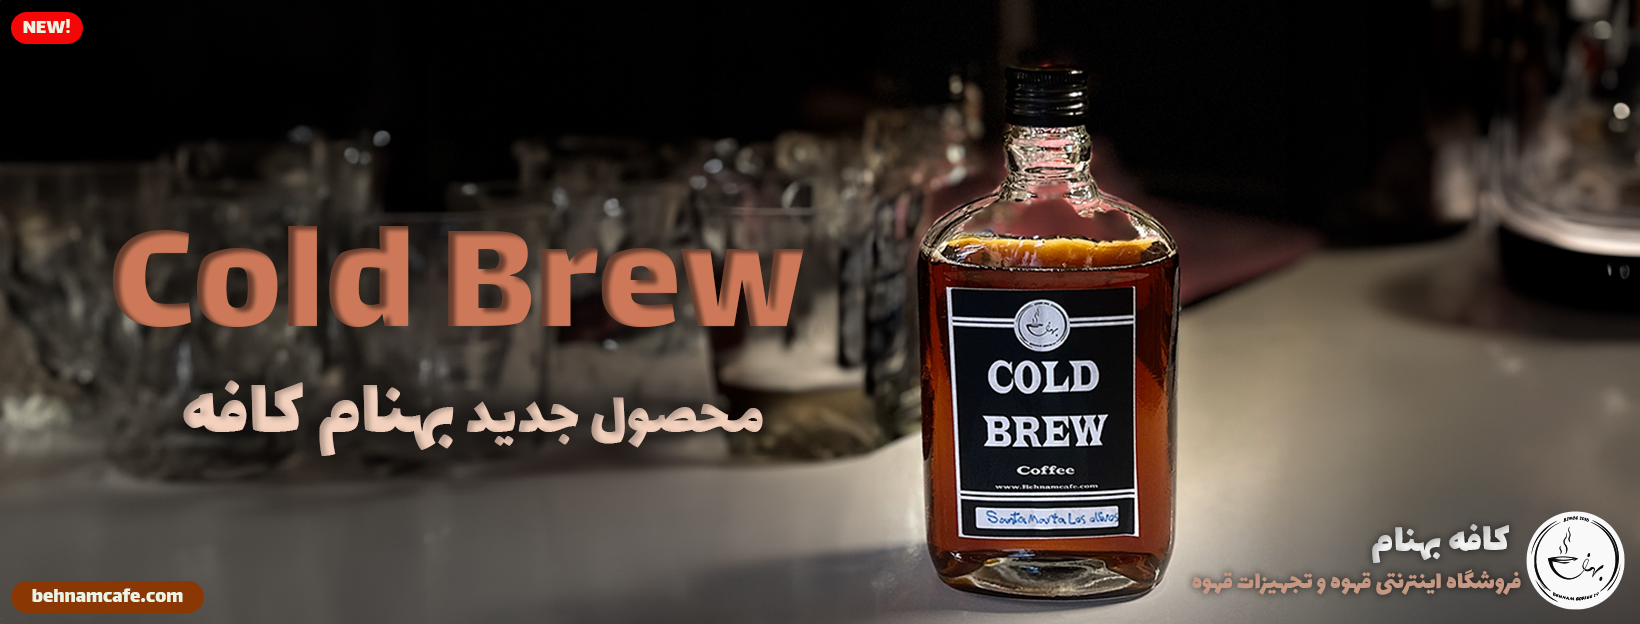 کلد برو - cold brew